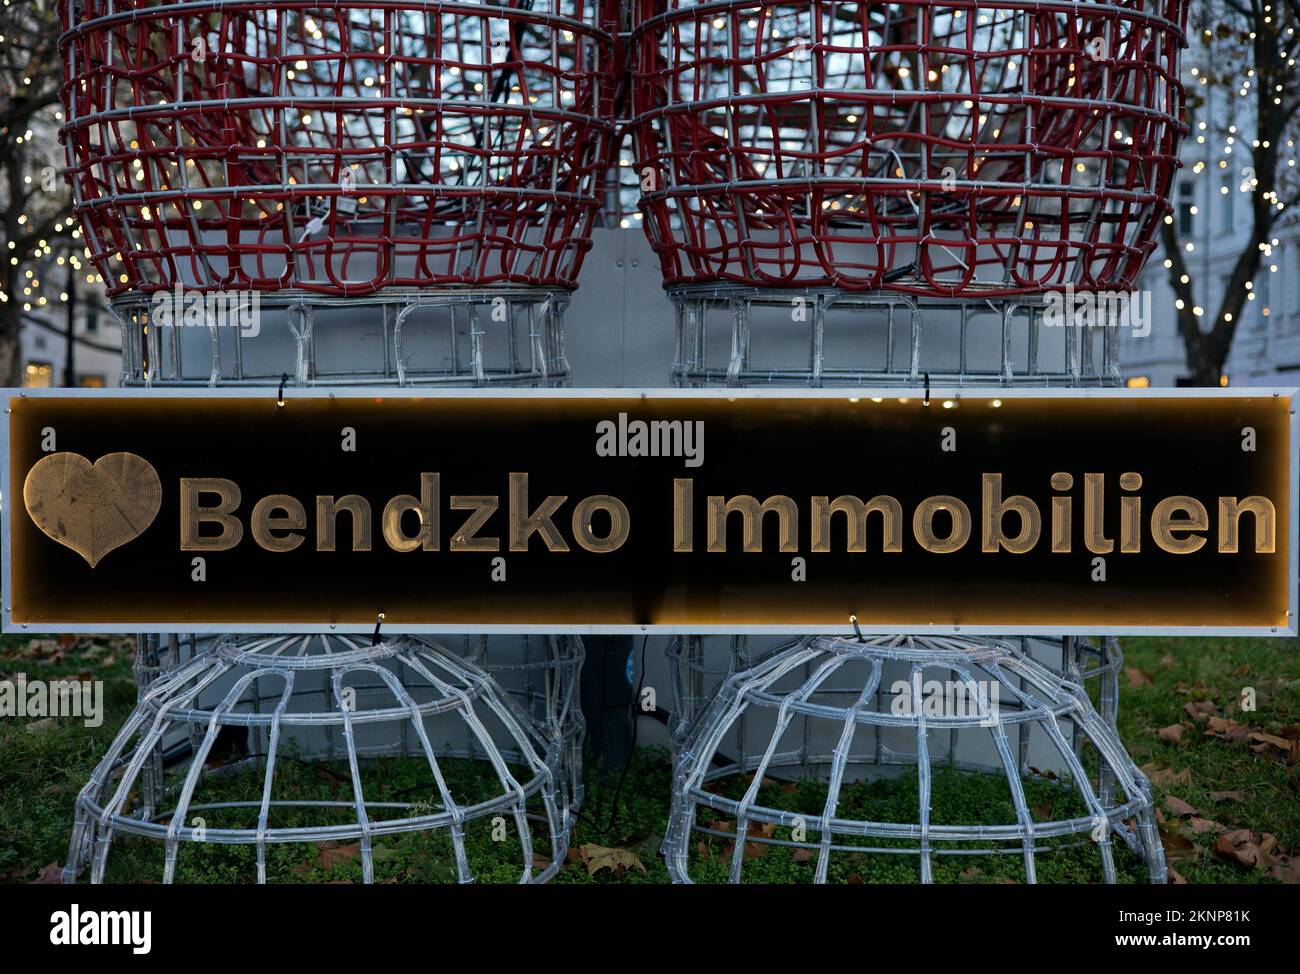 Bendzko Immobilien, Berlin, Germany Stock Photo